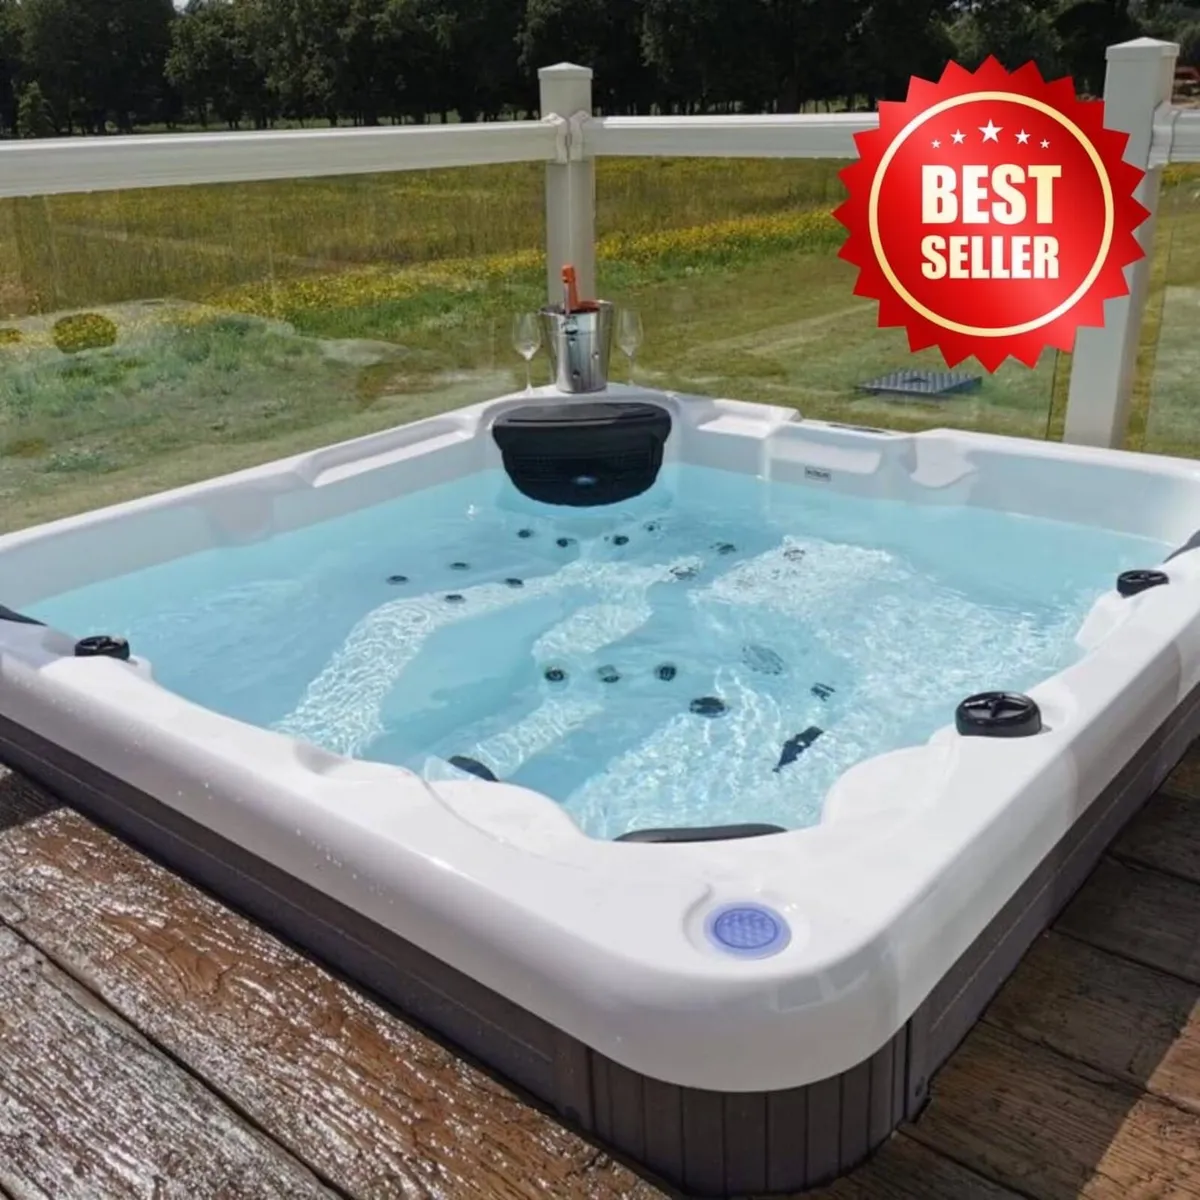 £1500 Off This Luxury Hot Tub